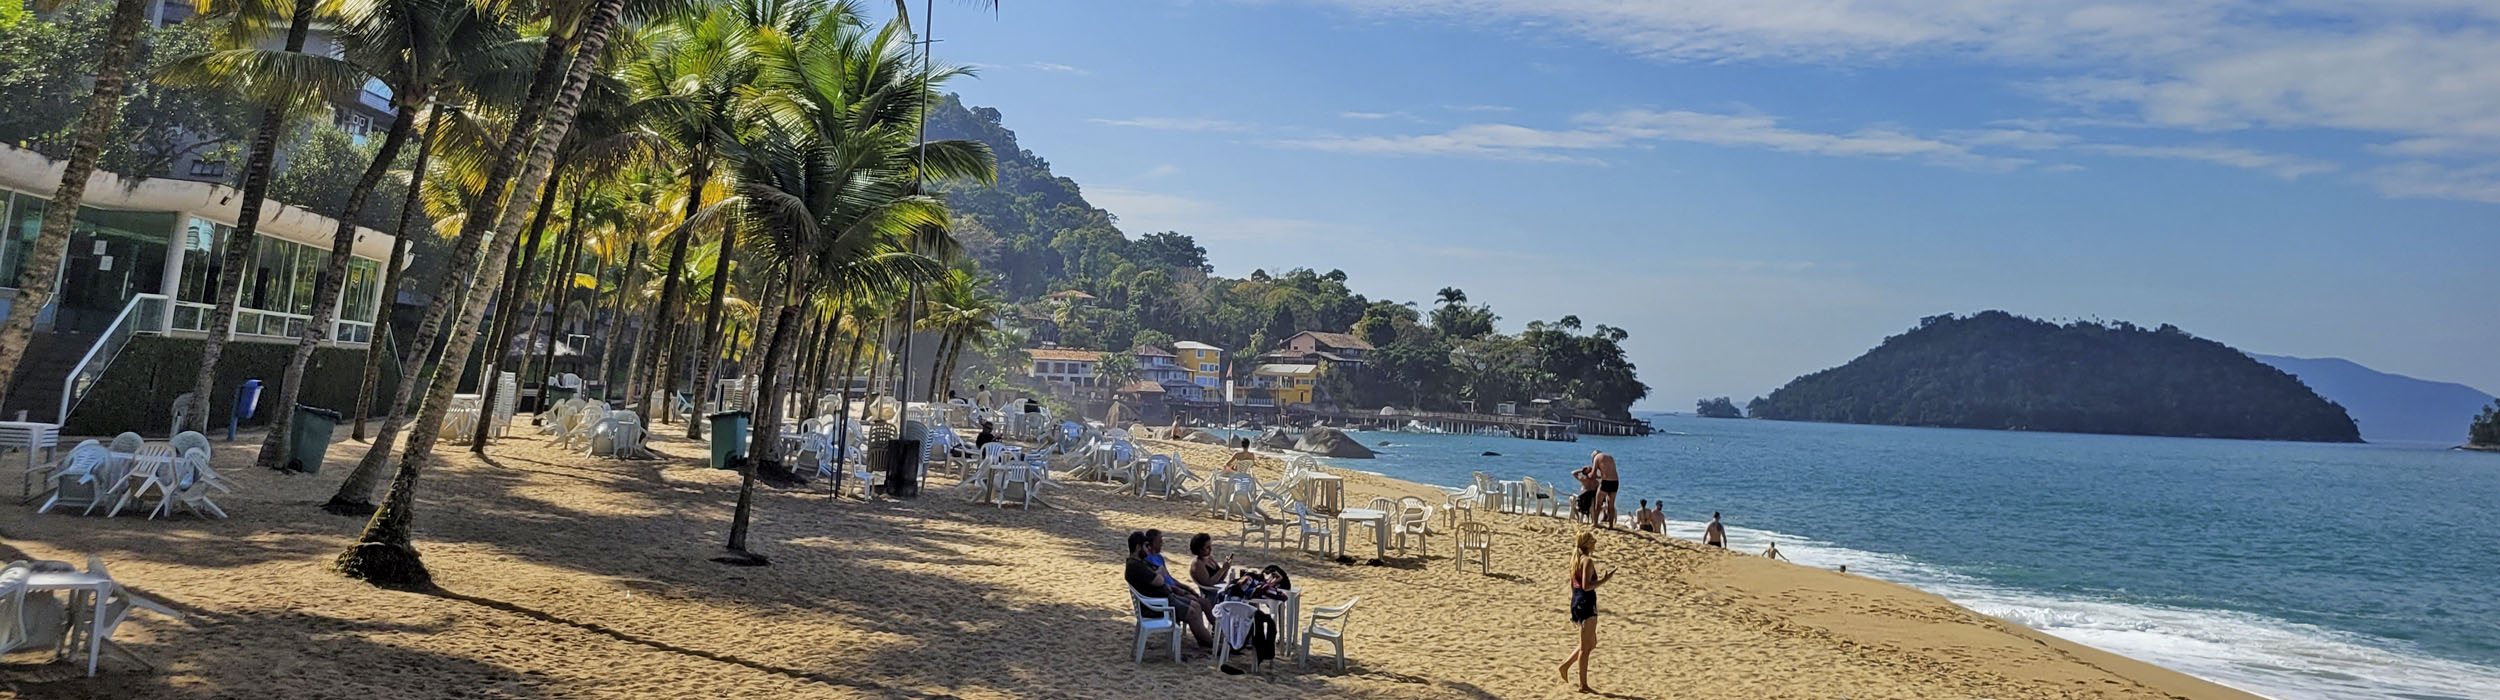 Praia Alta - Condomínio Porto Real Resort